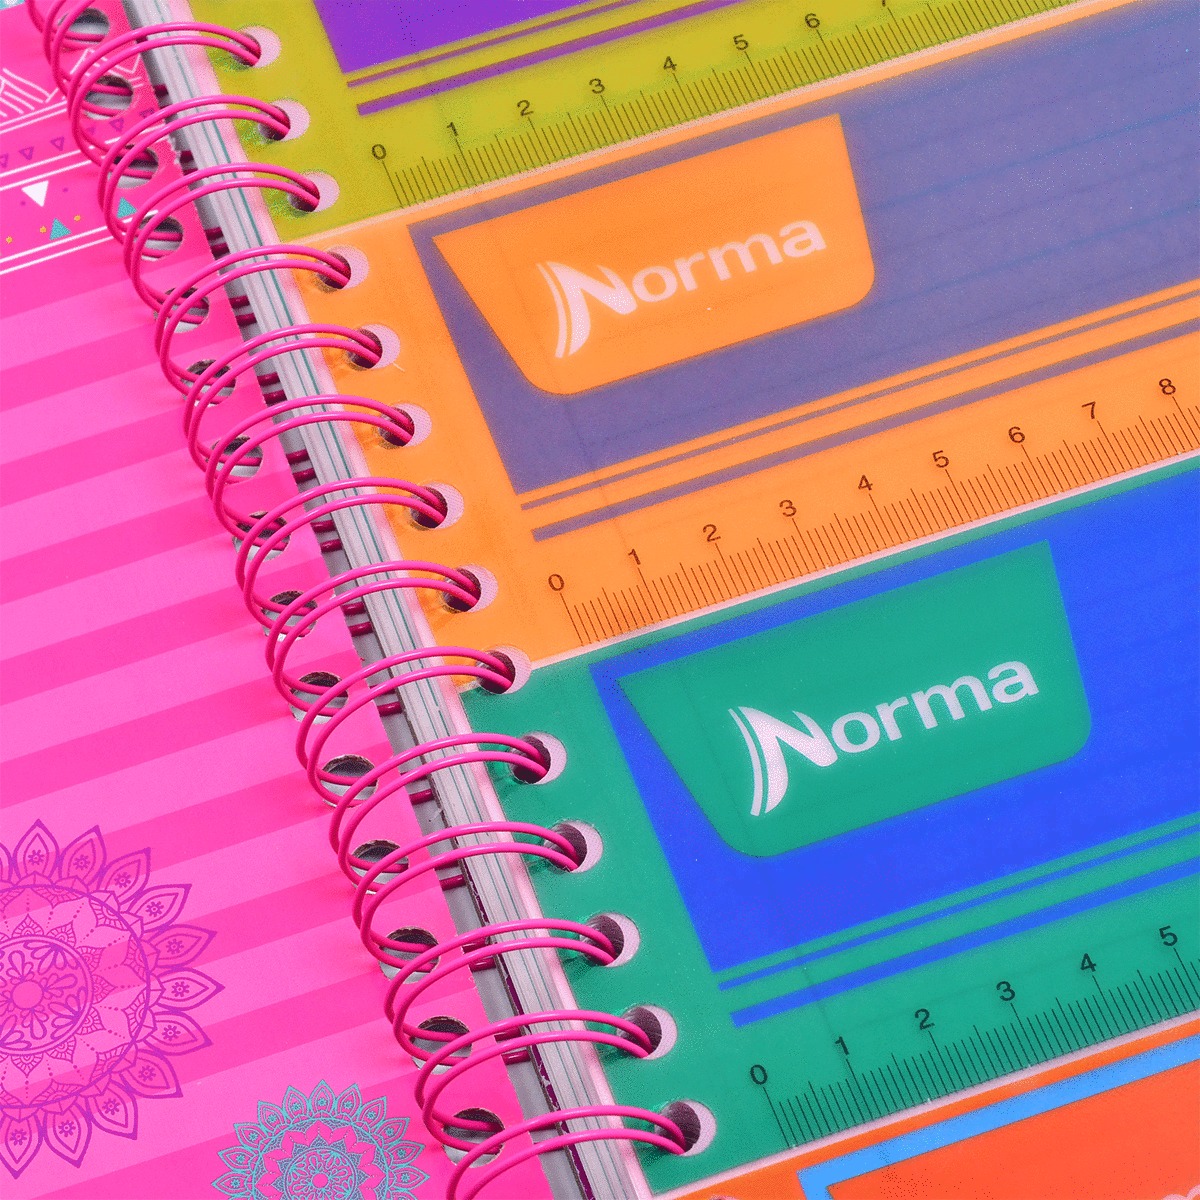 Cuaderno Profesional Norma Kiut Flowers Raya 160 hojas | Office Depot Mexico